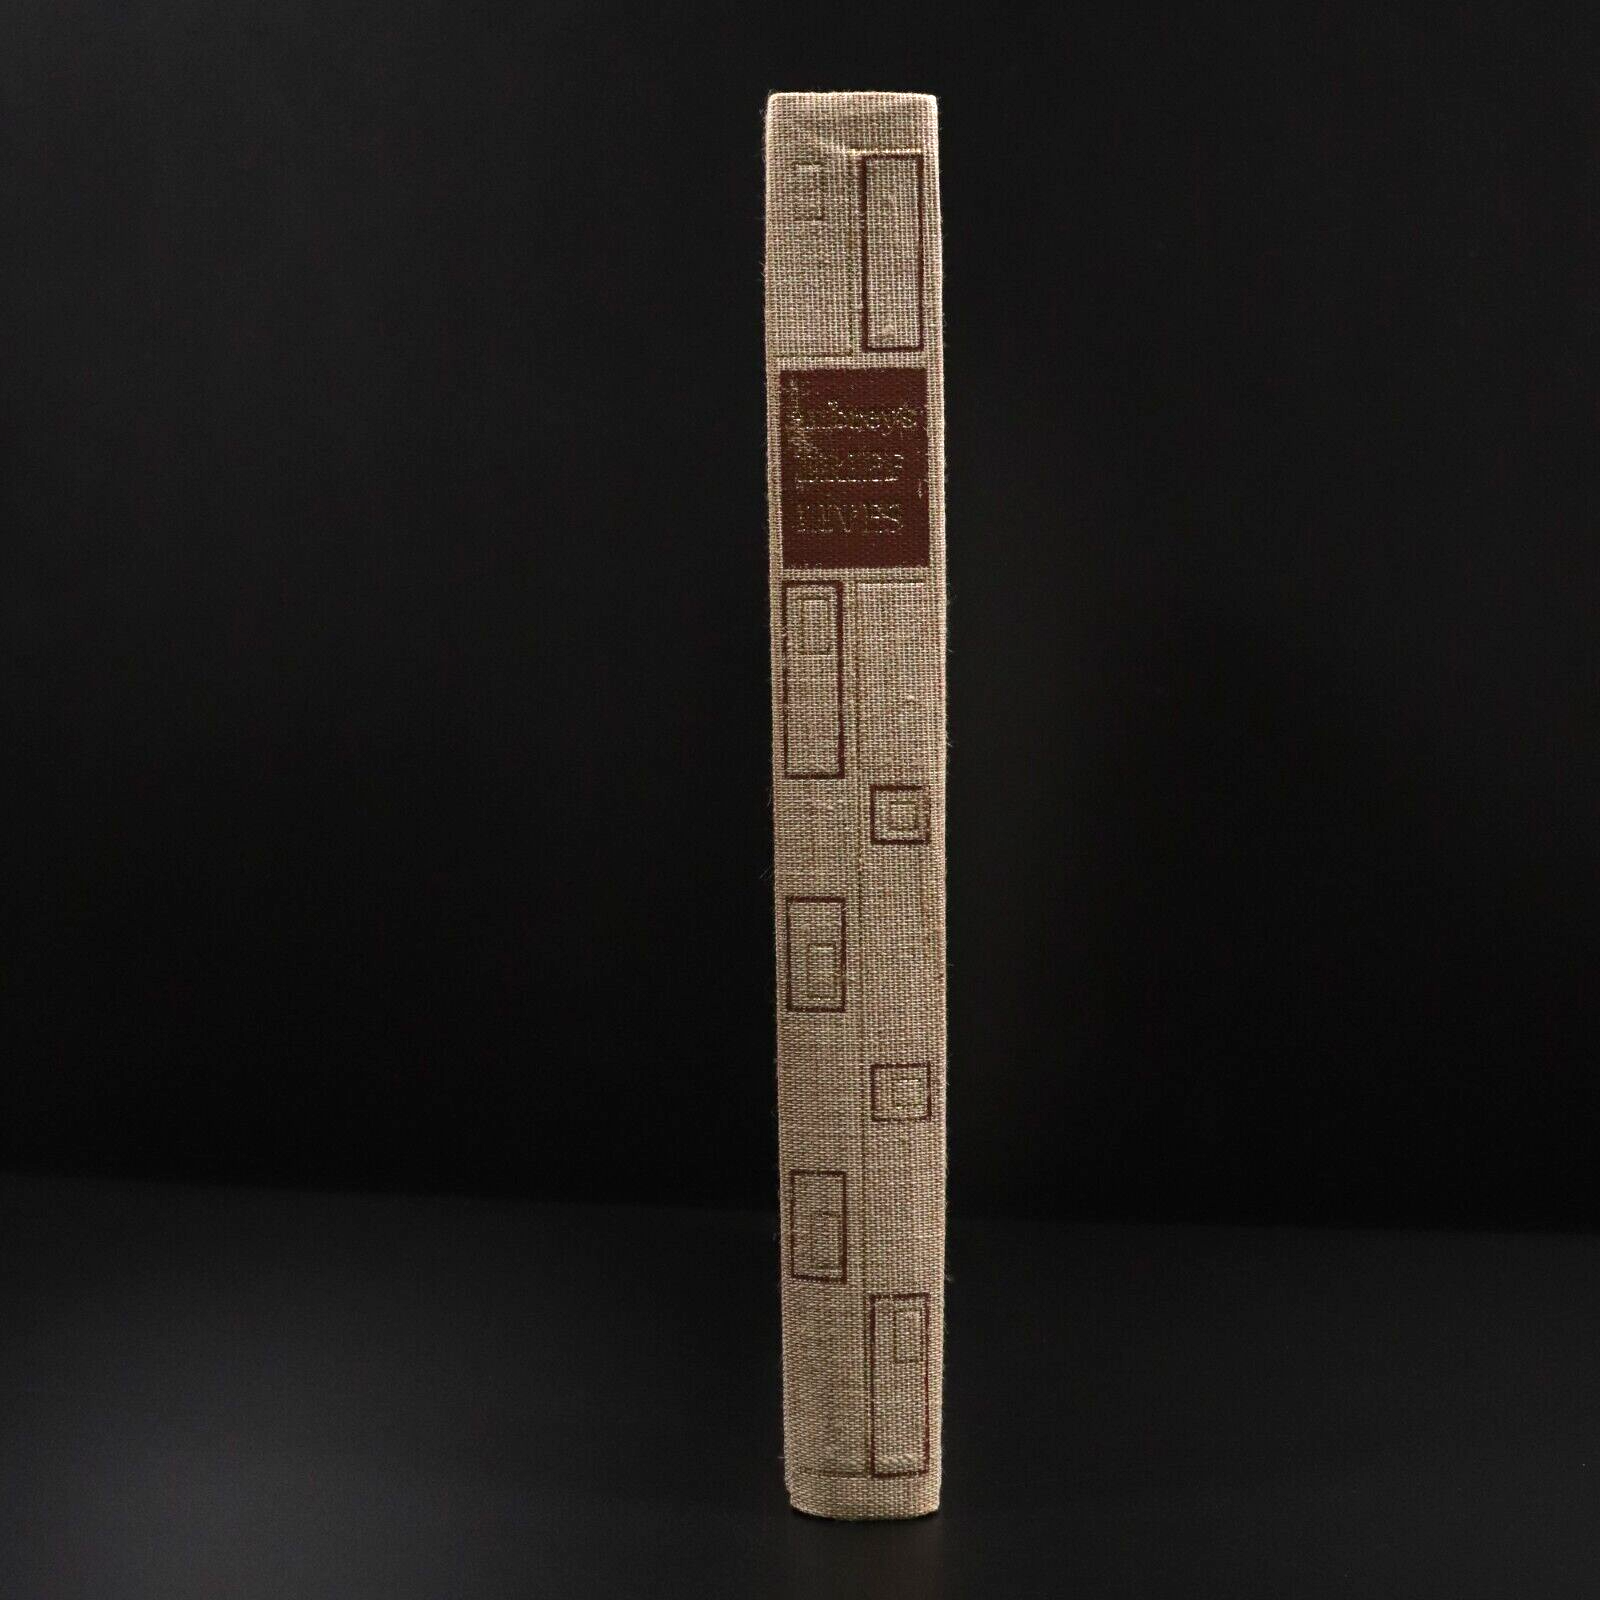 1975 John Aubrey Brief Lives - Folio Society British History Book